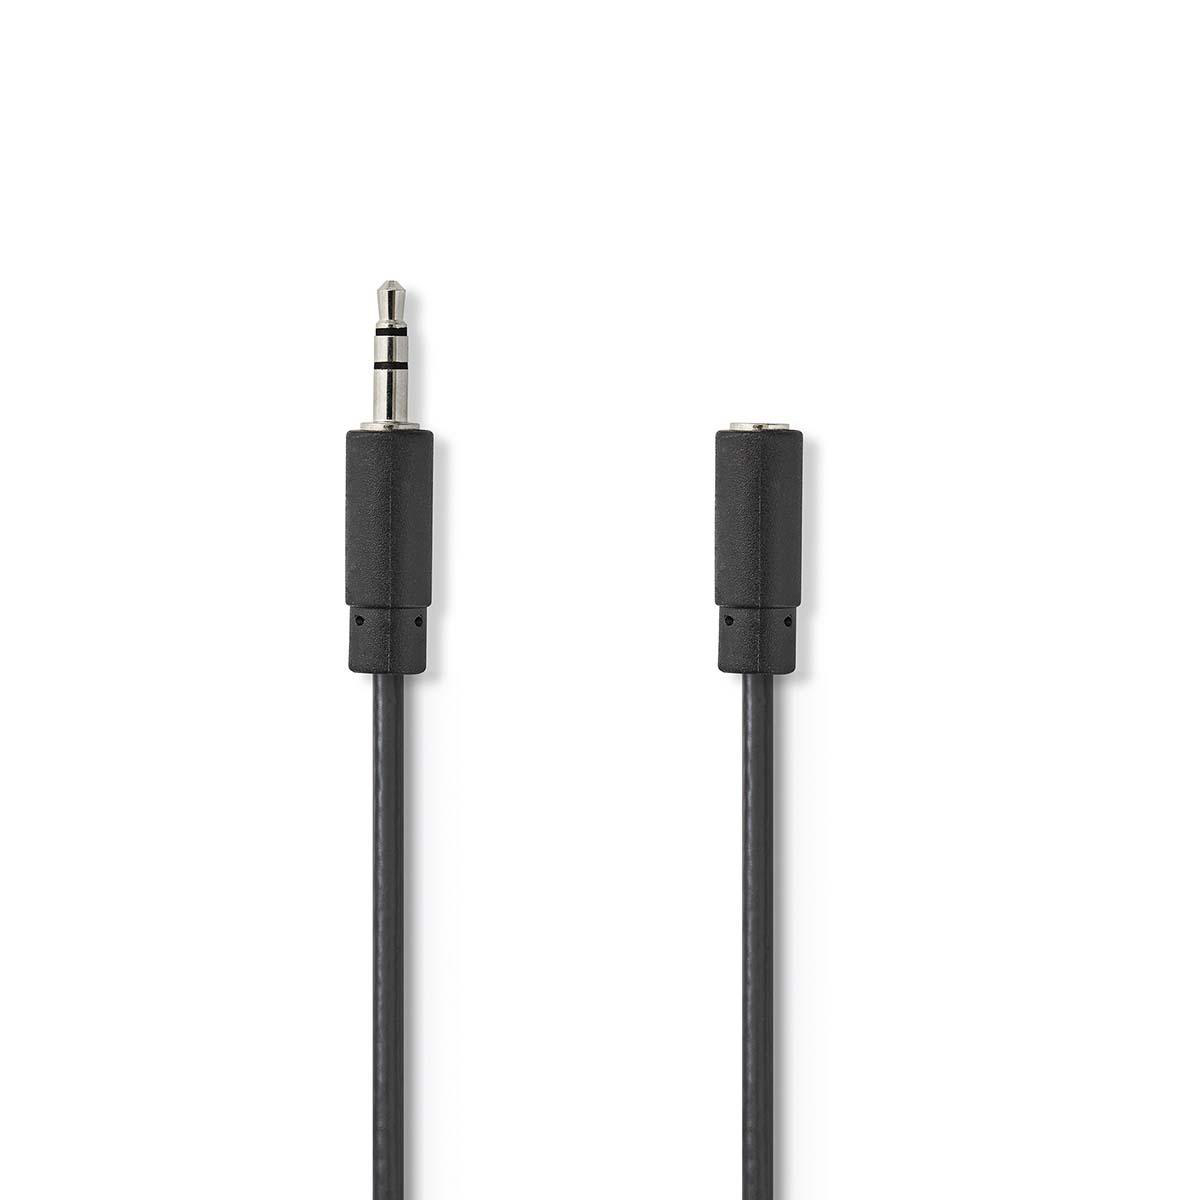 Nedis Stereo Audio kabel, 3.5 mm Male - 3.5 mm Female, 5m, zwart